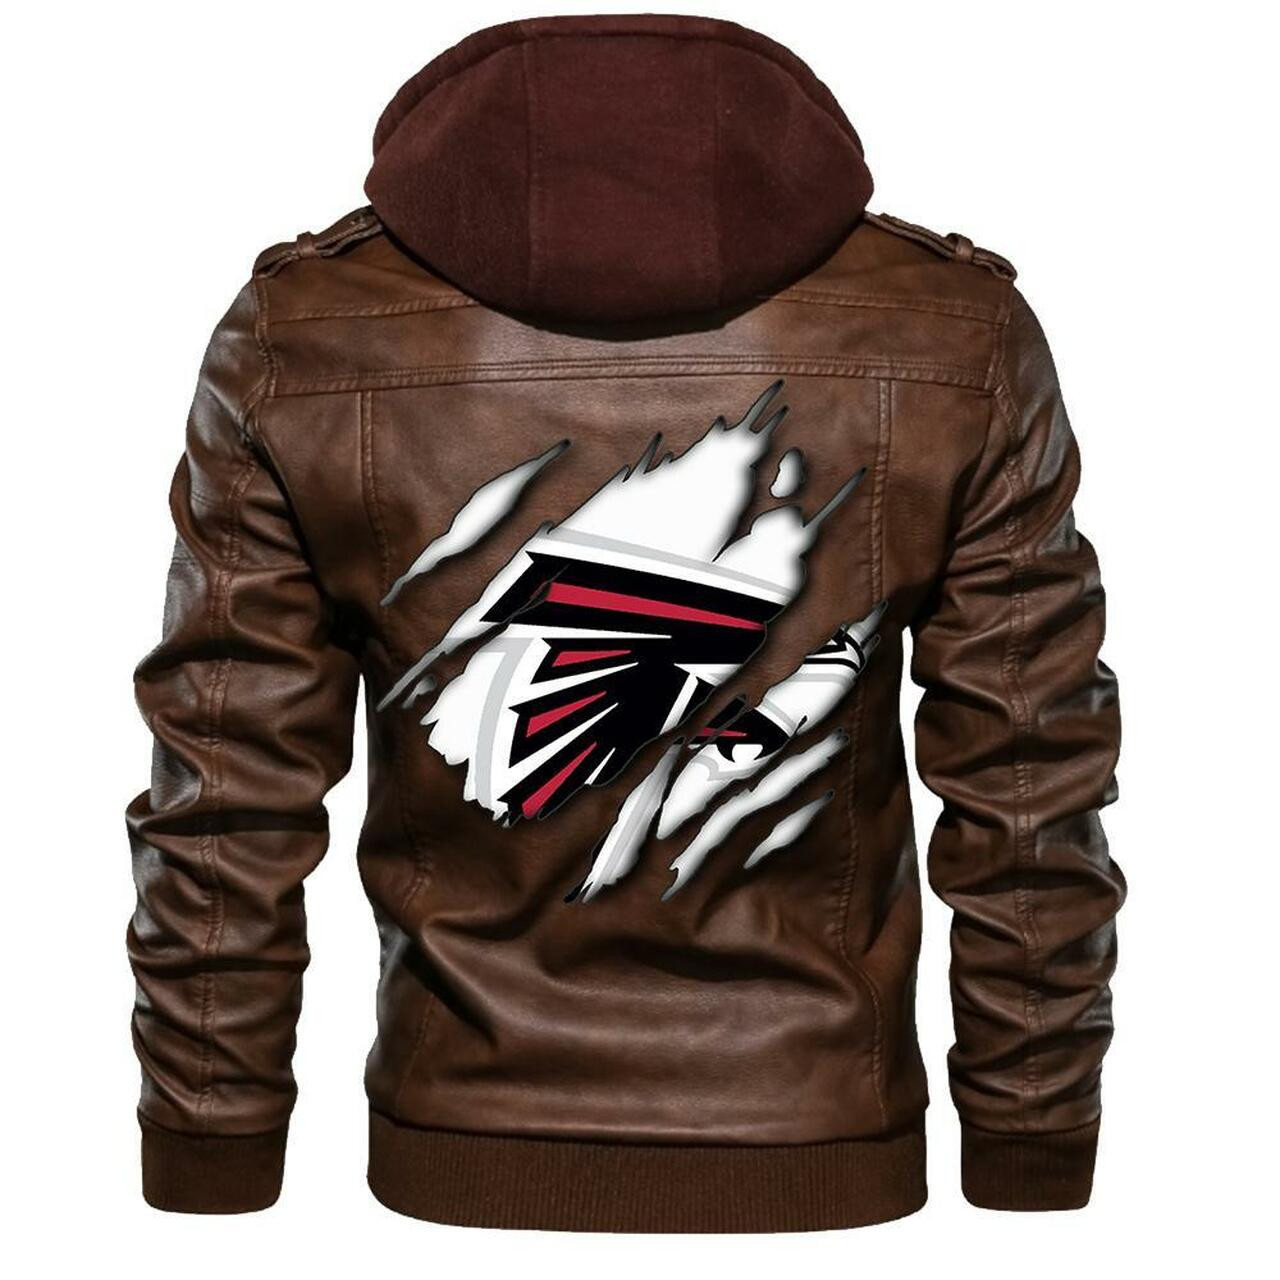 Top leather jacket Sells Best on Techcomshop 132